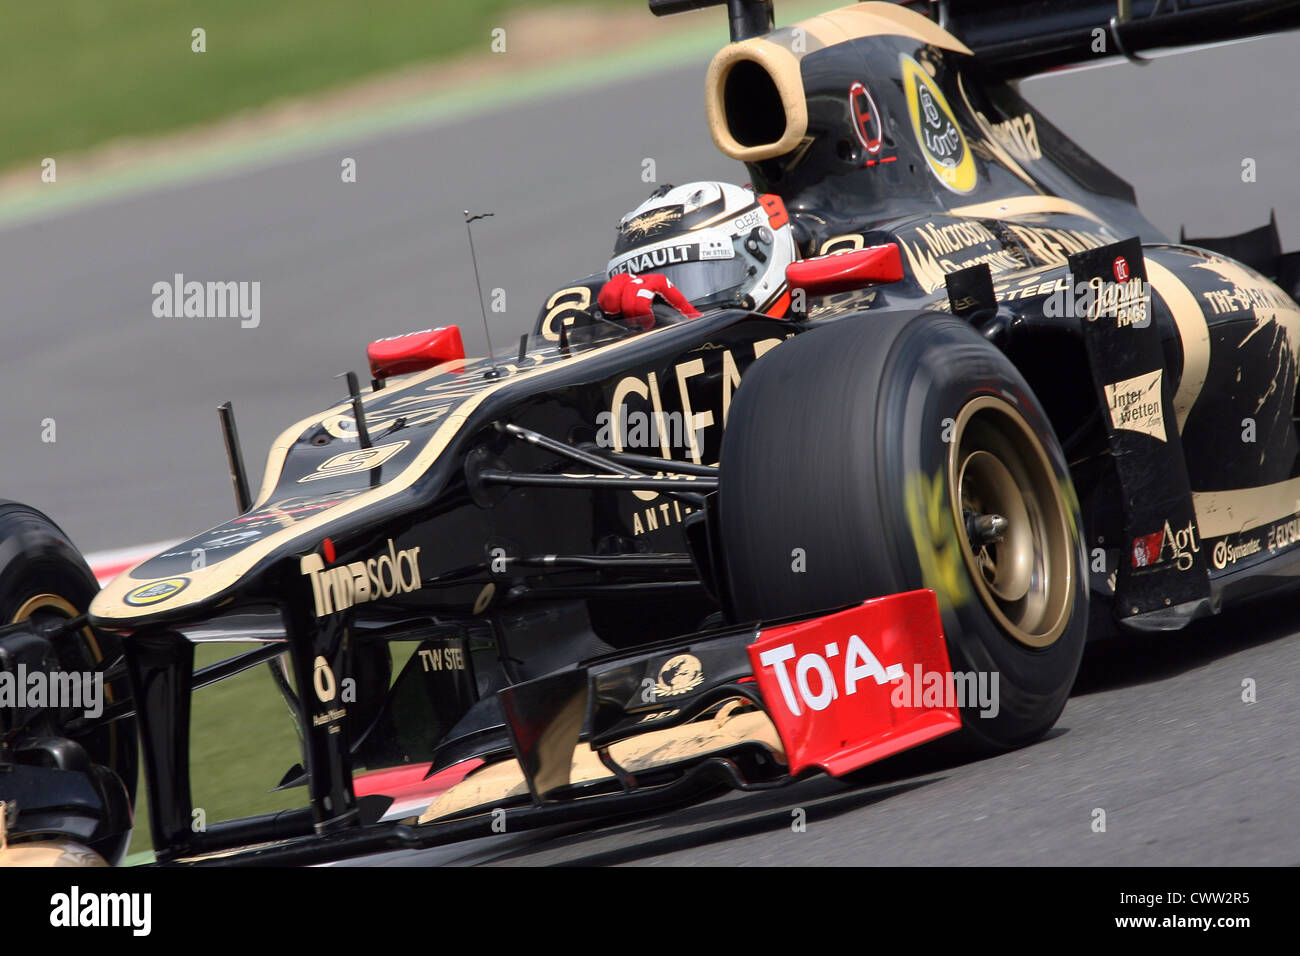 Kimi Raikkonen, (Lotus F1) British Grand Prix, Silverstone UK. Formula One, F1 Stock Photo